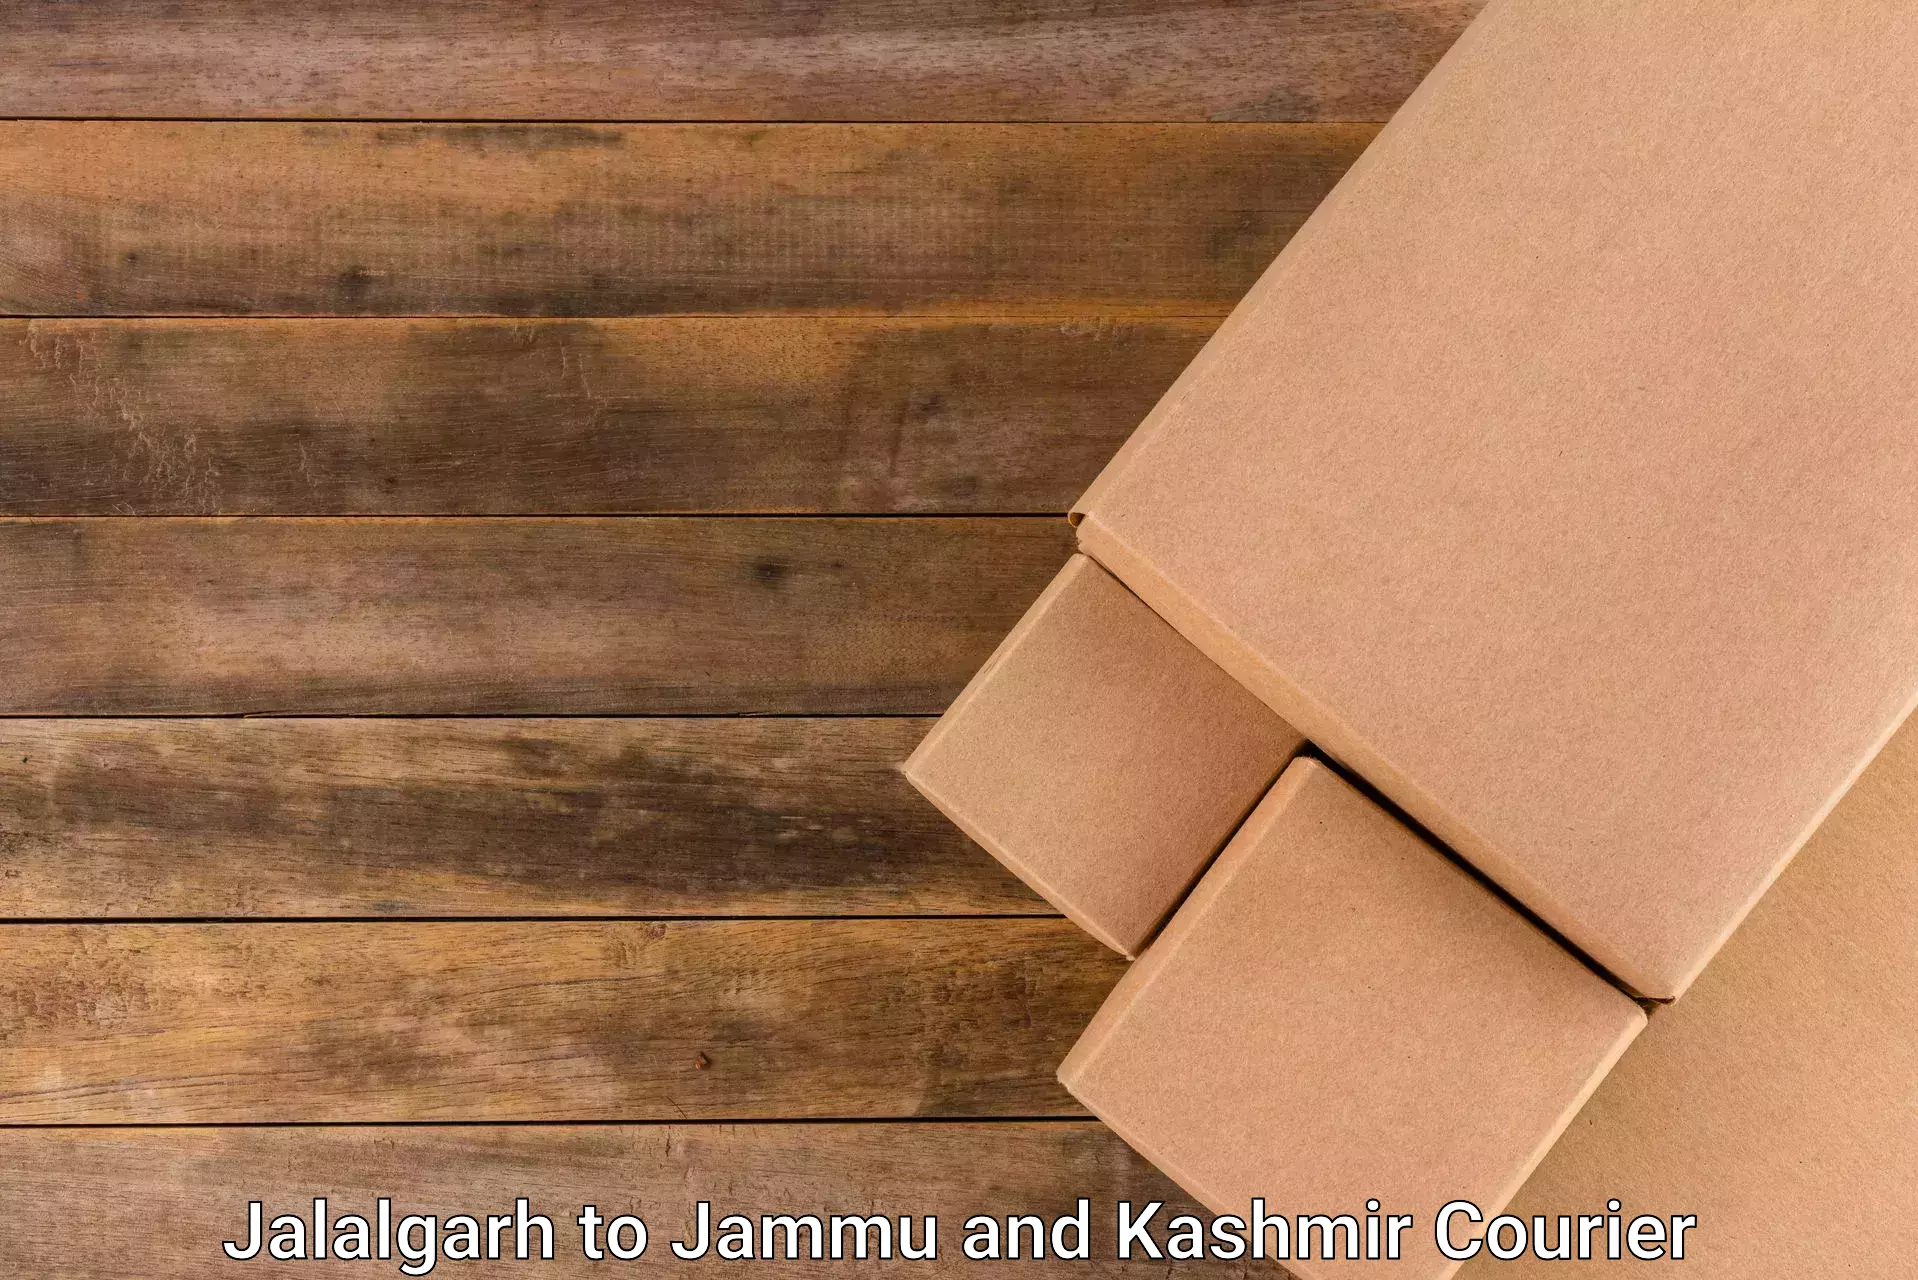 User-friendly courier app Jalalgarh to Ranbir Singh Pura